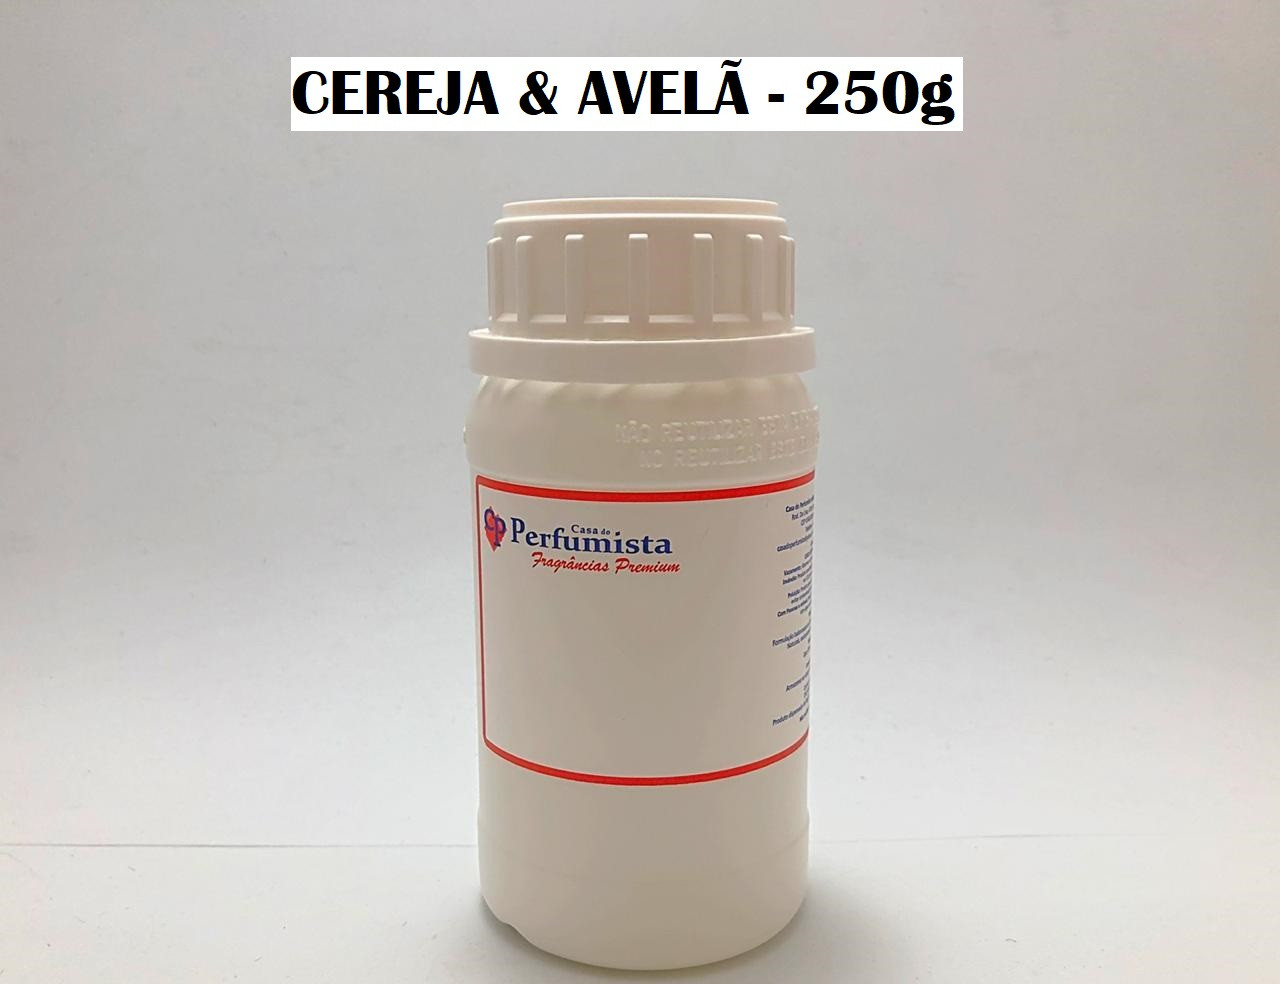 CEREJA E AVELÃ - 250g